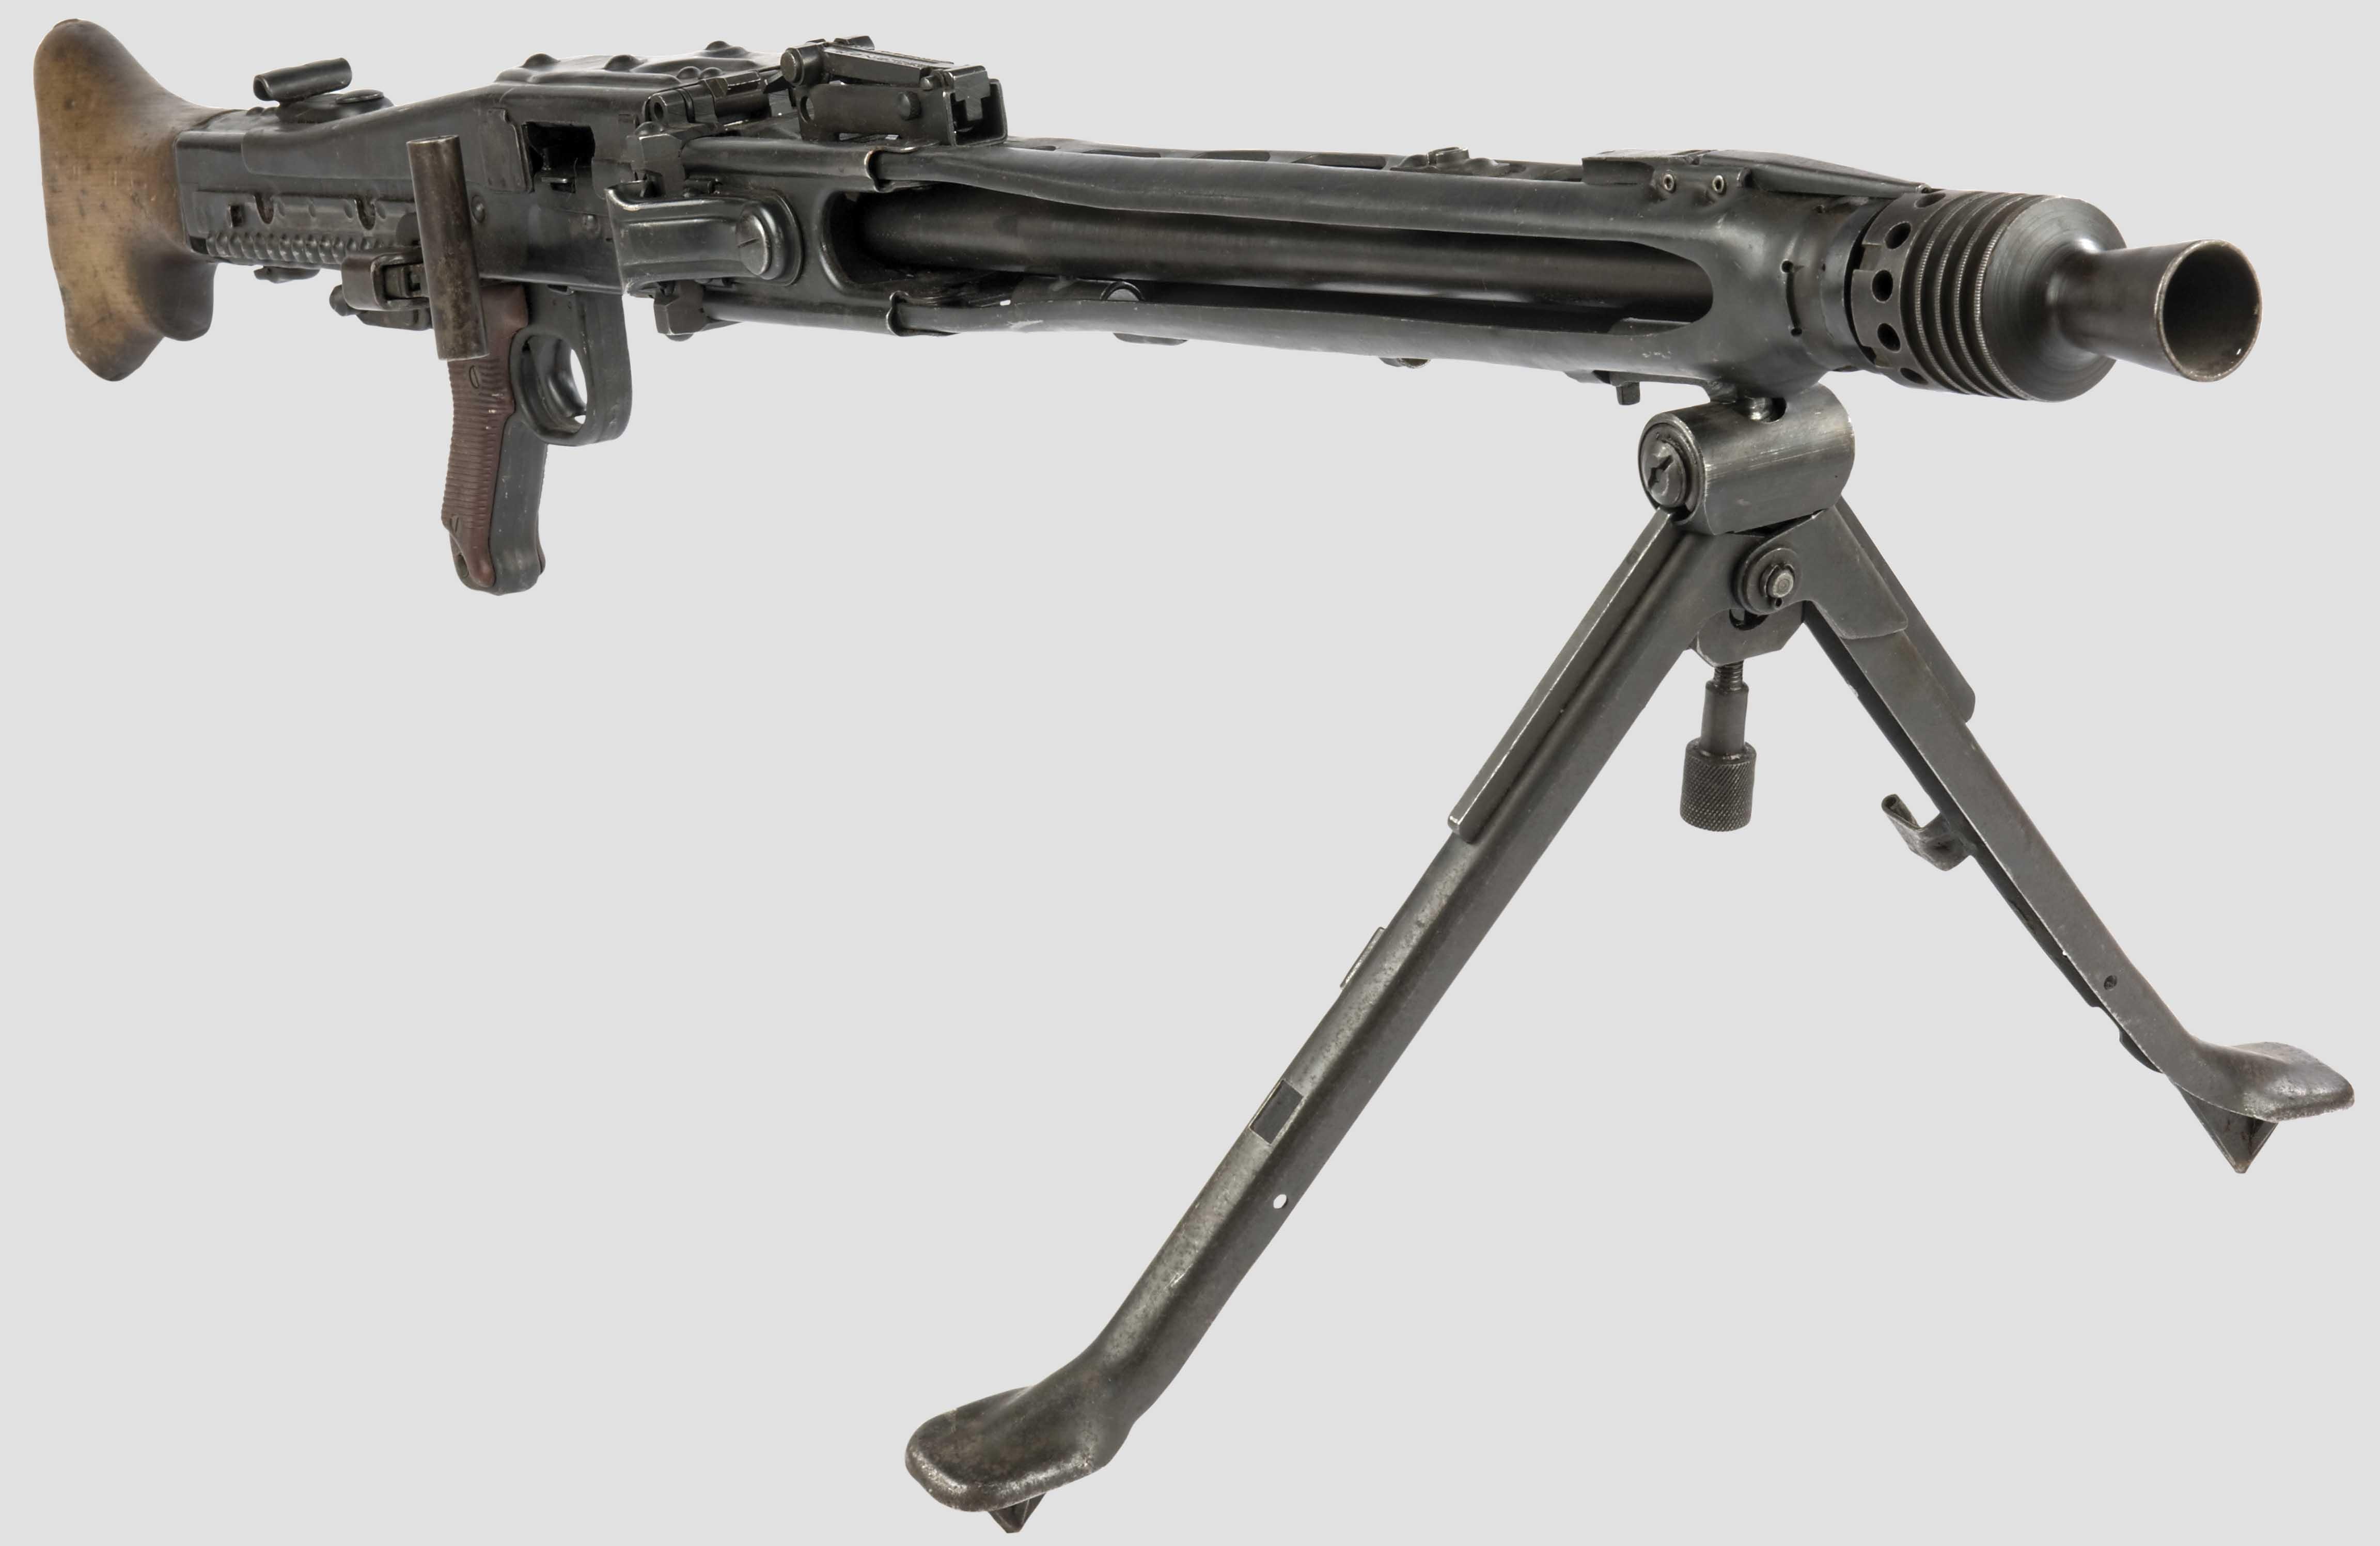 MG 42 (скорочено з німецької: Maschinengewehr 42, або «скоростріл 42